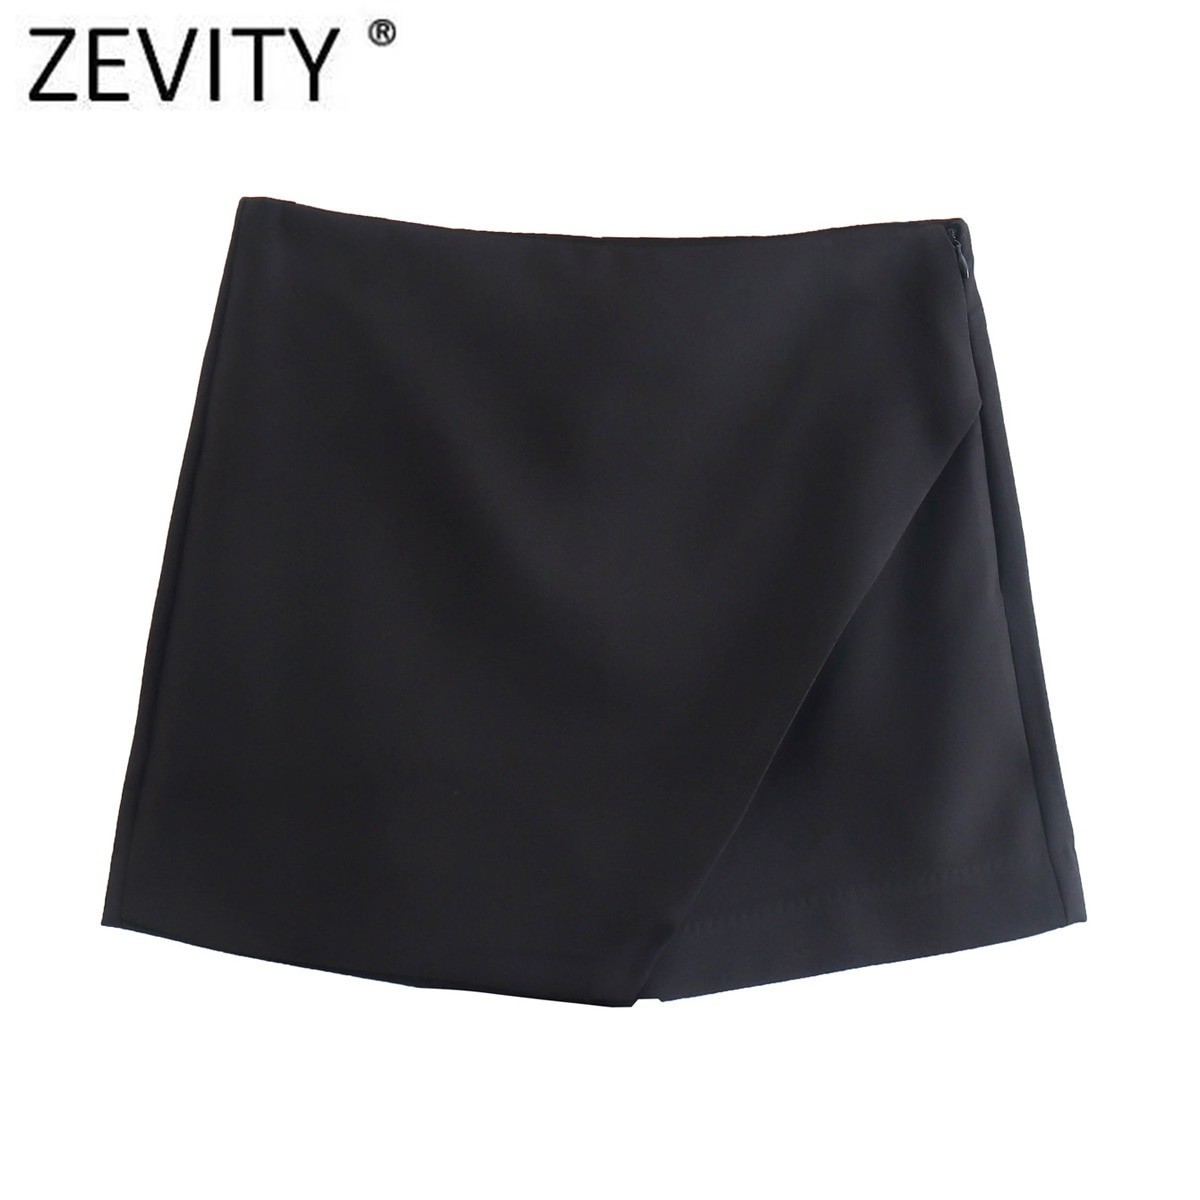 ZEVITY-New-Women-Fashion-Candy-Color-Asymmetrical-Shorts-Skirts-Lady-Zipper-Fly-Pockets-Hot-Shorts-Chic-3